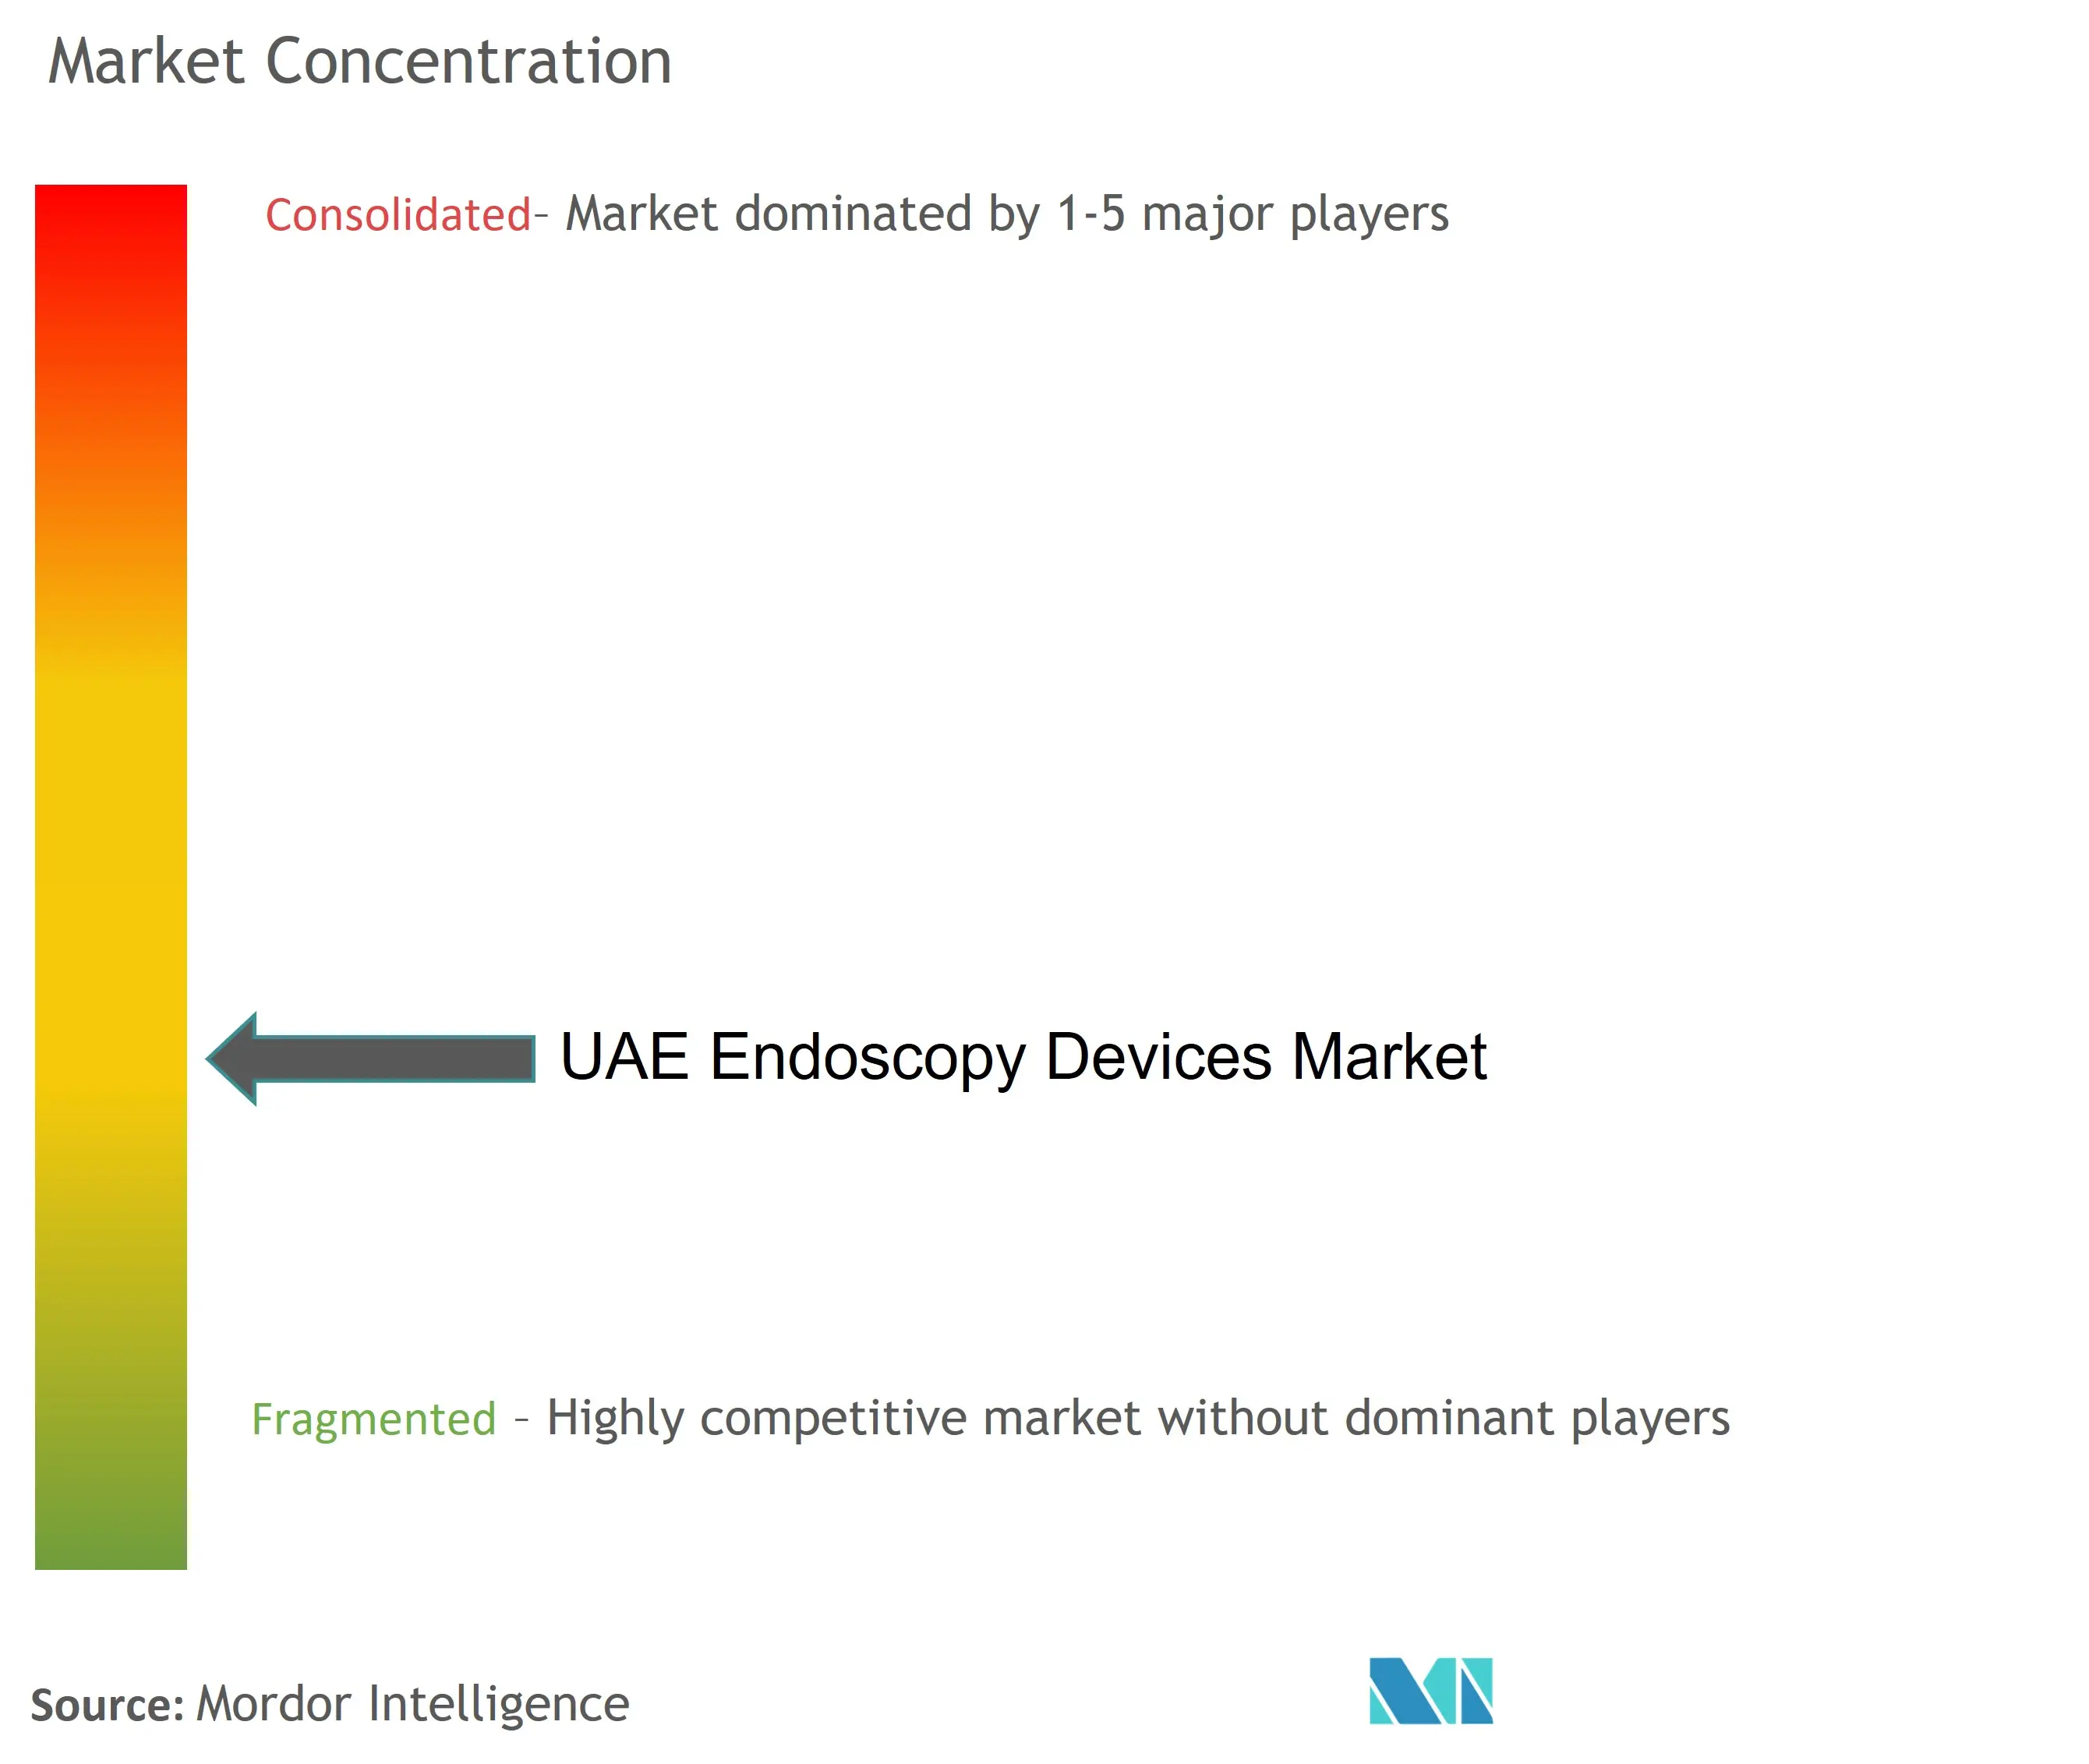 UAE Endoscopy Devices Market Concentration